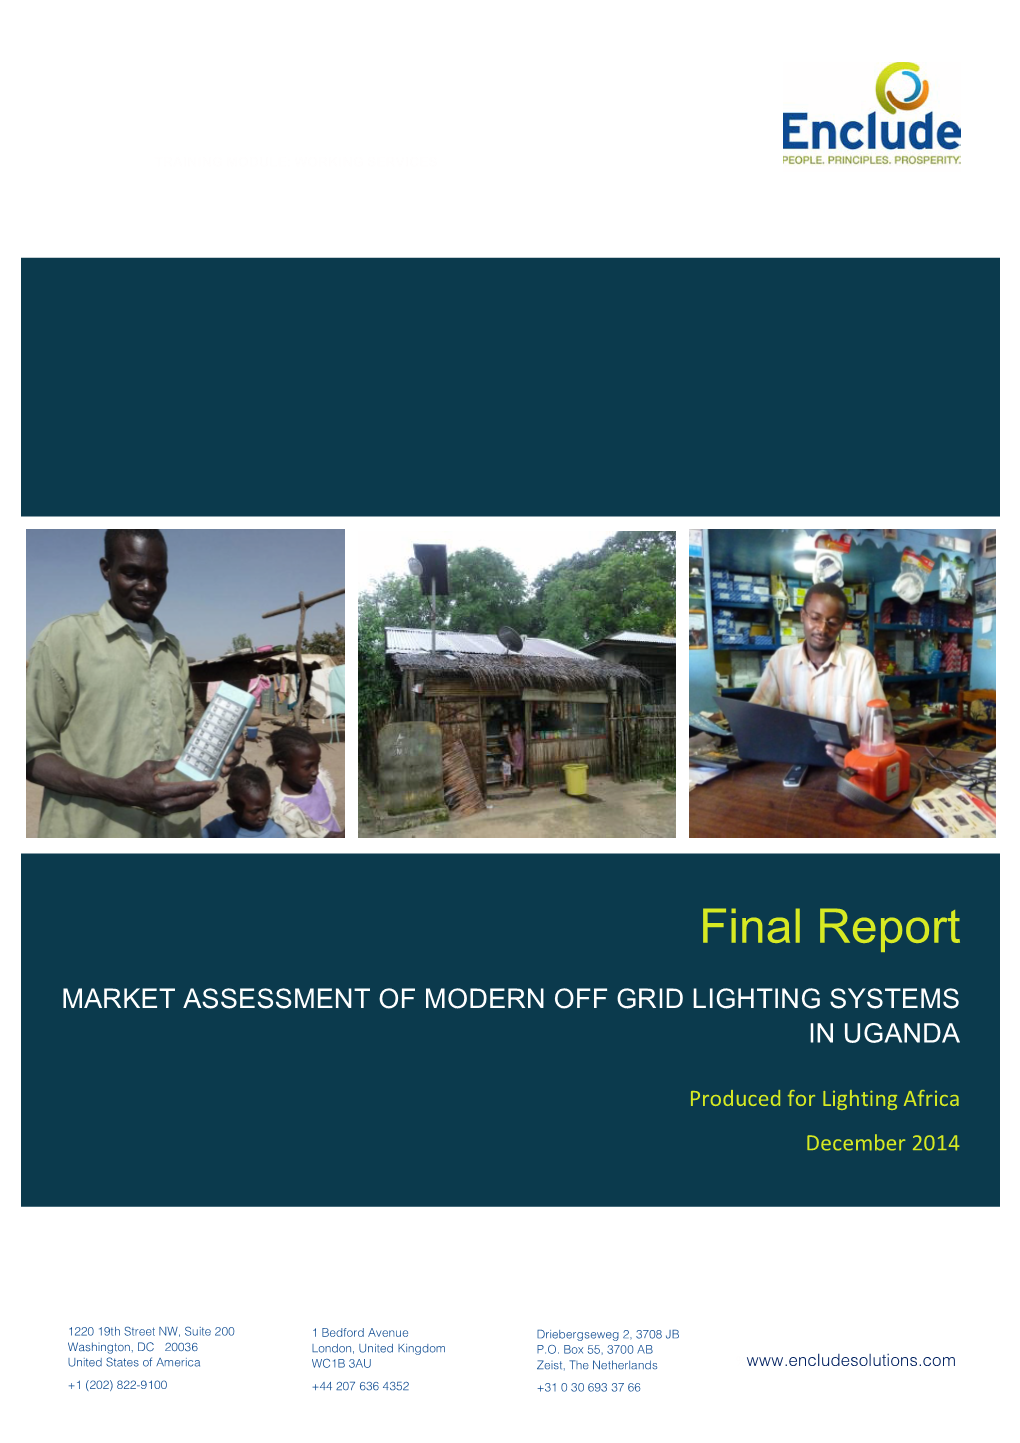 Market Assessment of Modern Off Grid Lighting Systems in Uganda